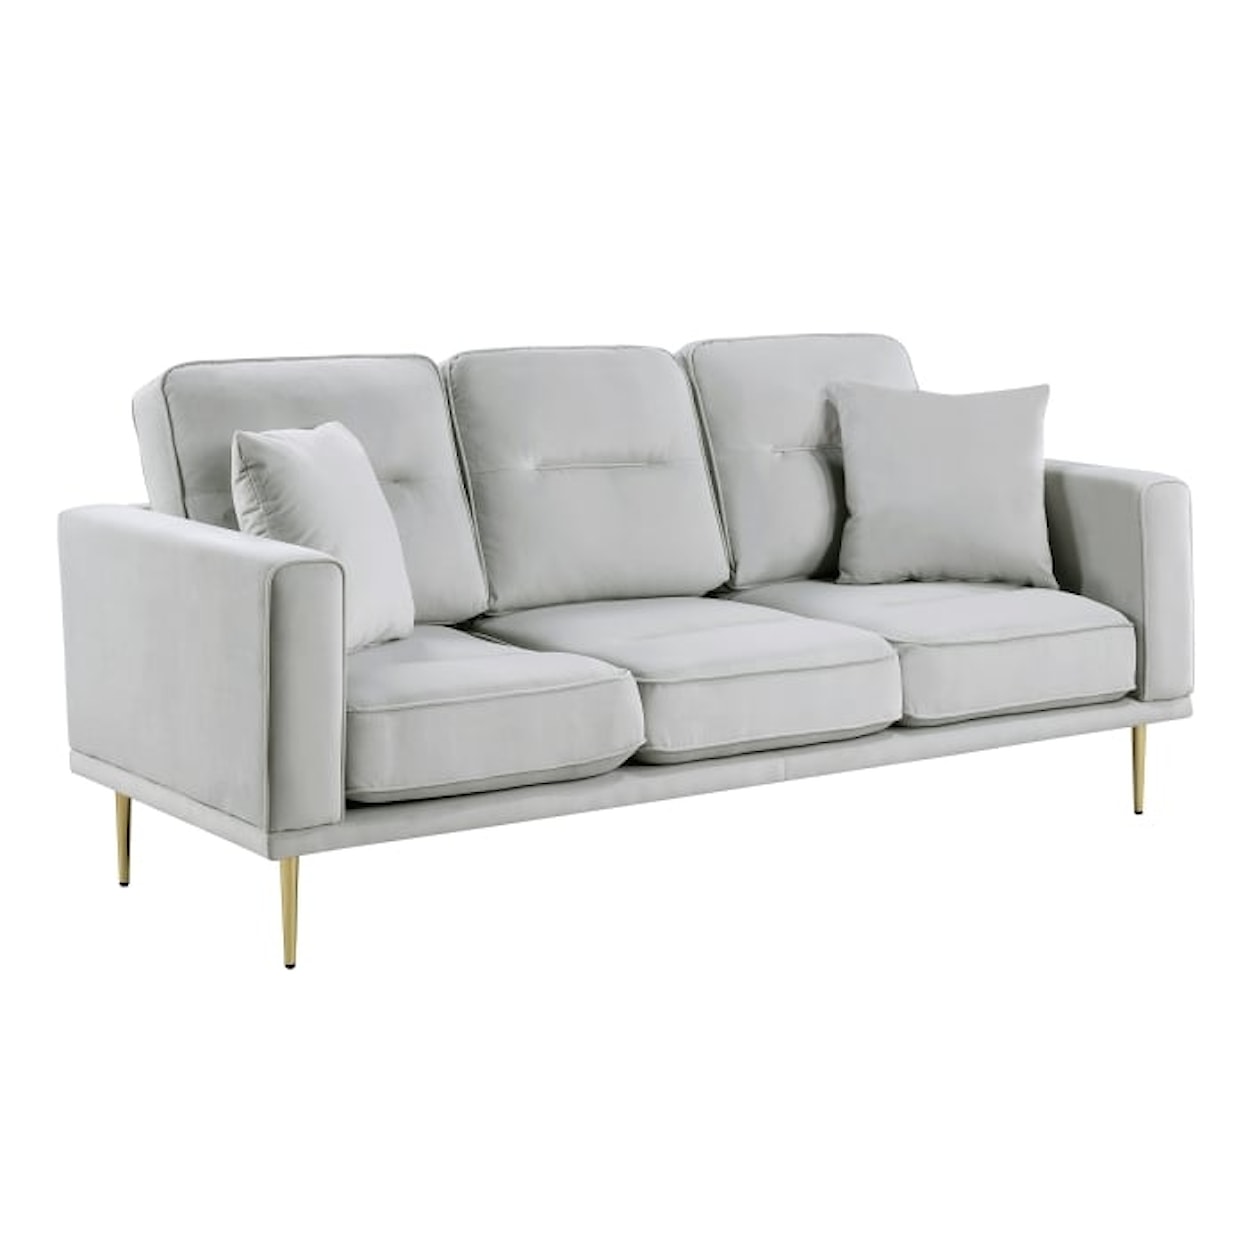 Homelegance Furniture Violetta Stationary Sofa